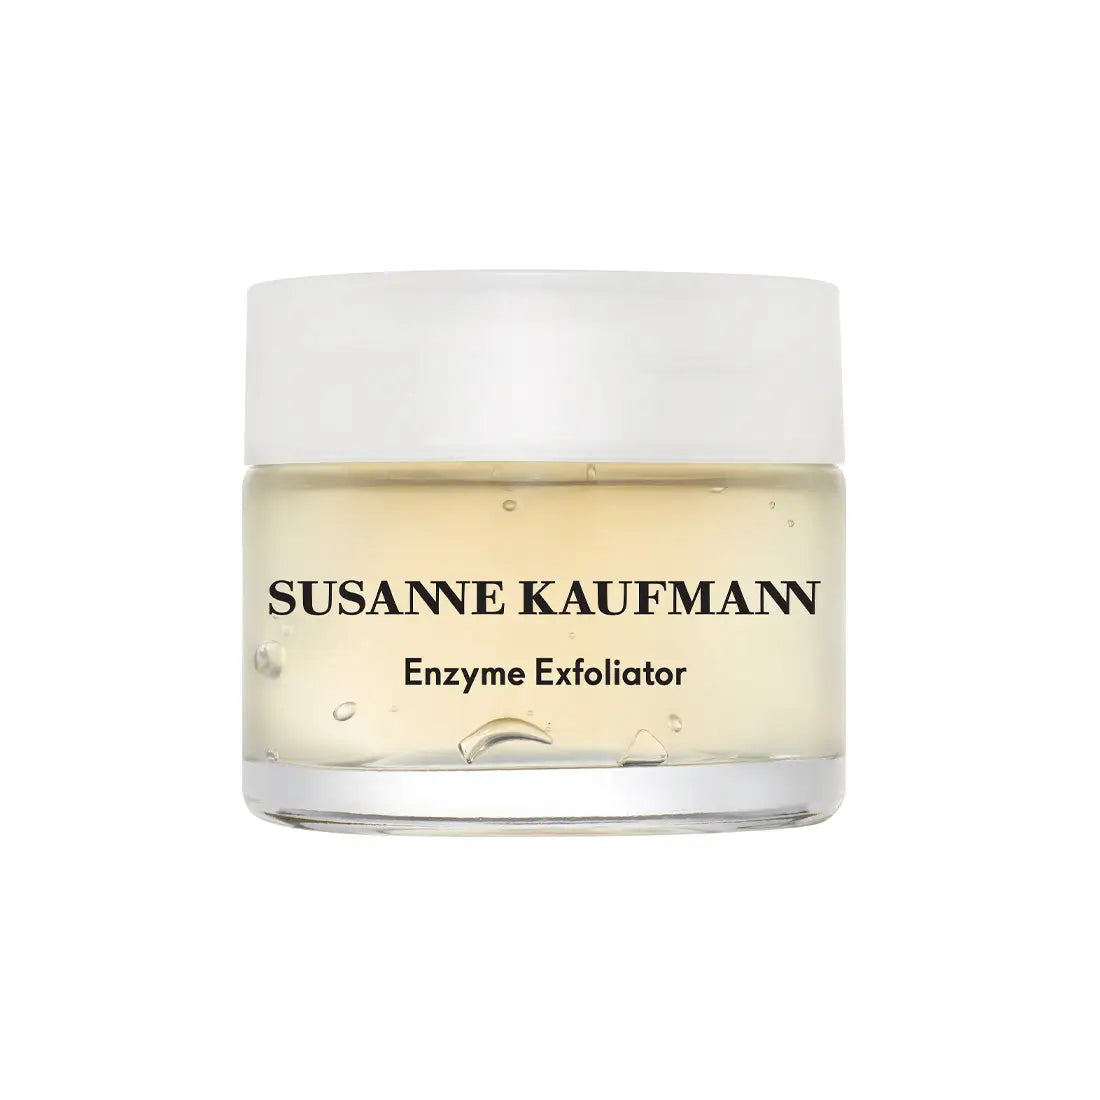 USA | Susanne Exfoliator Kaufmann ALYAKA 50ml Enzyme